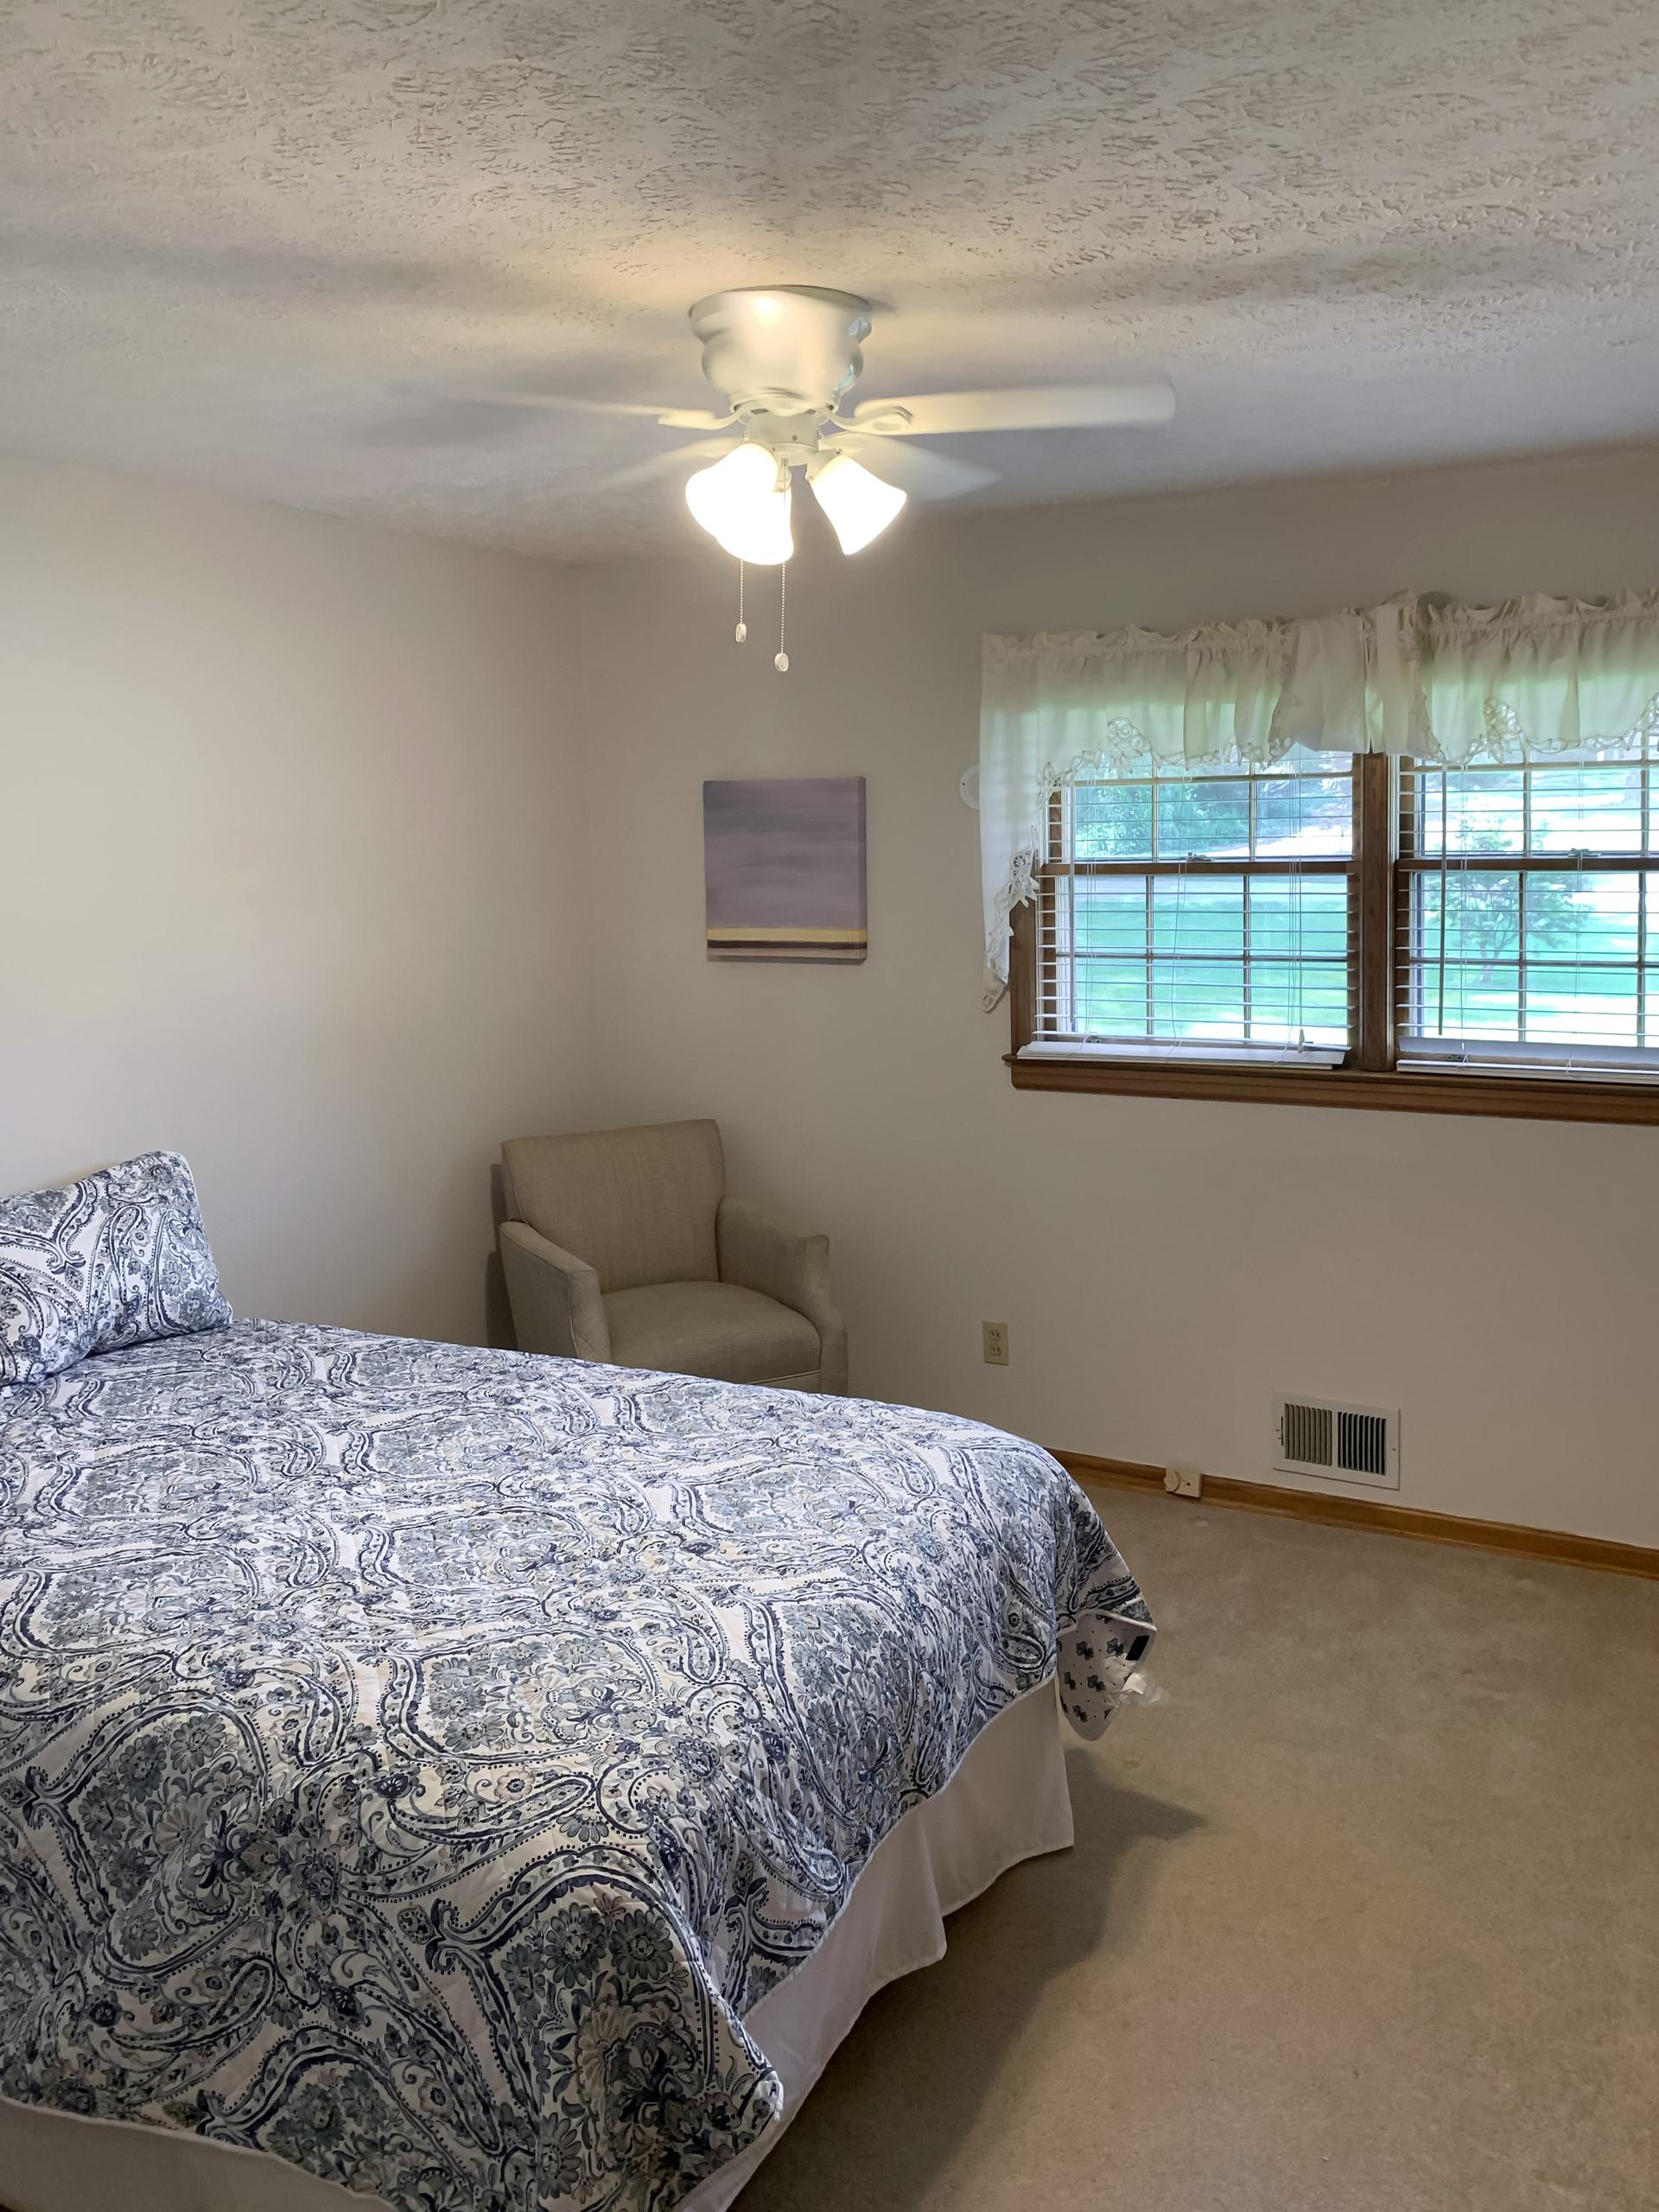 bedroom, detected: ceiling fan, window blind, bed